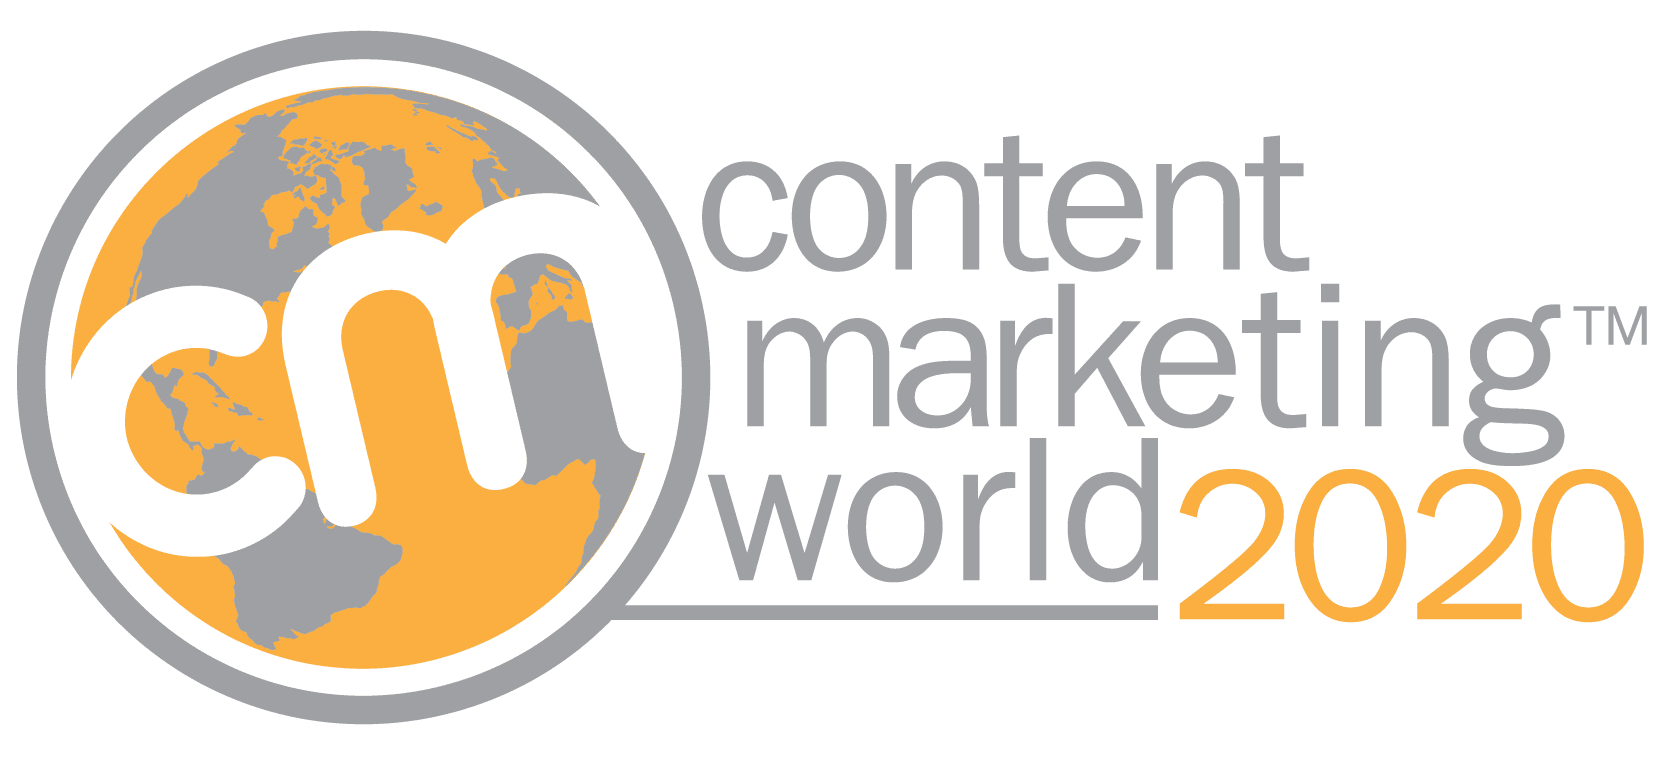 Content Marketing World 2020 Logo